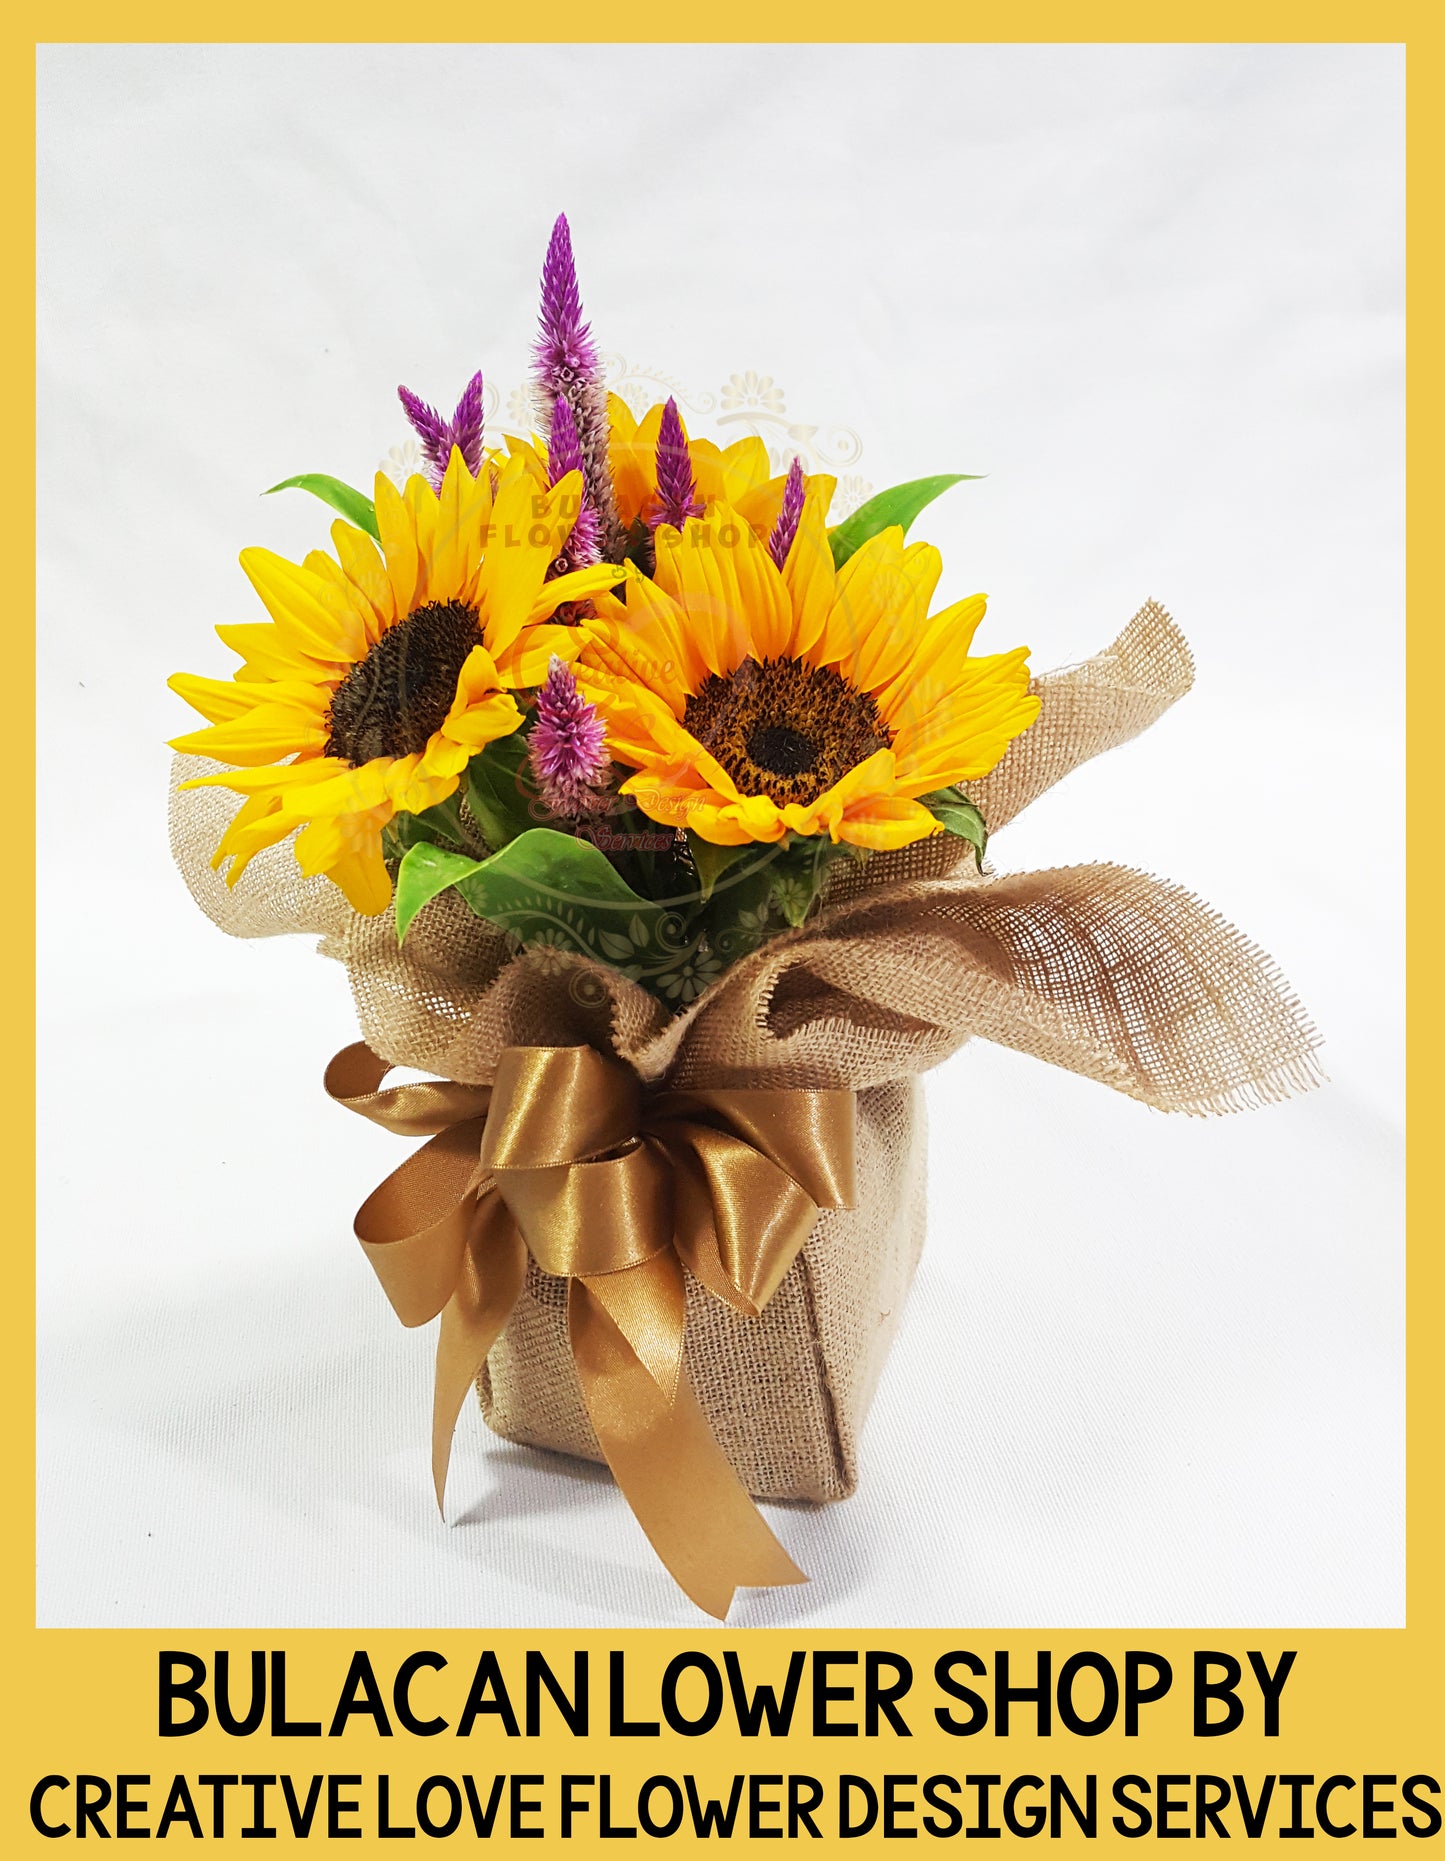 SUNFLOWER - Vase - 3 sunflower currated